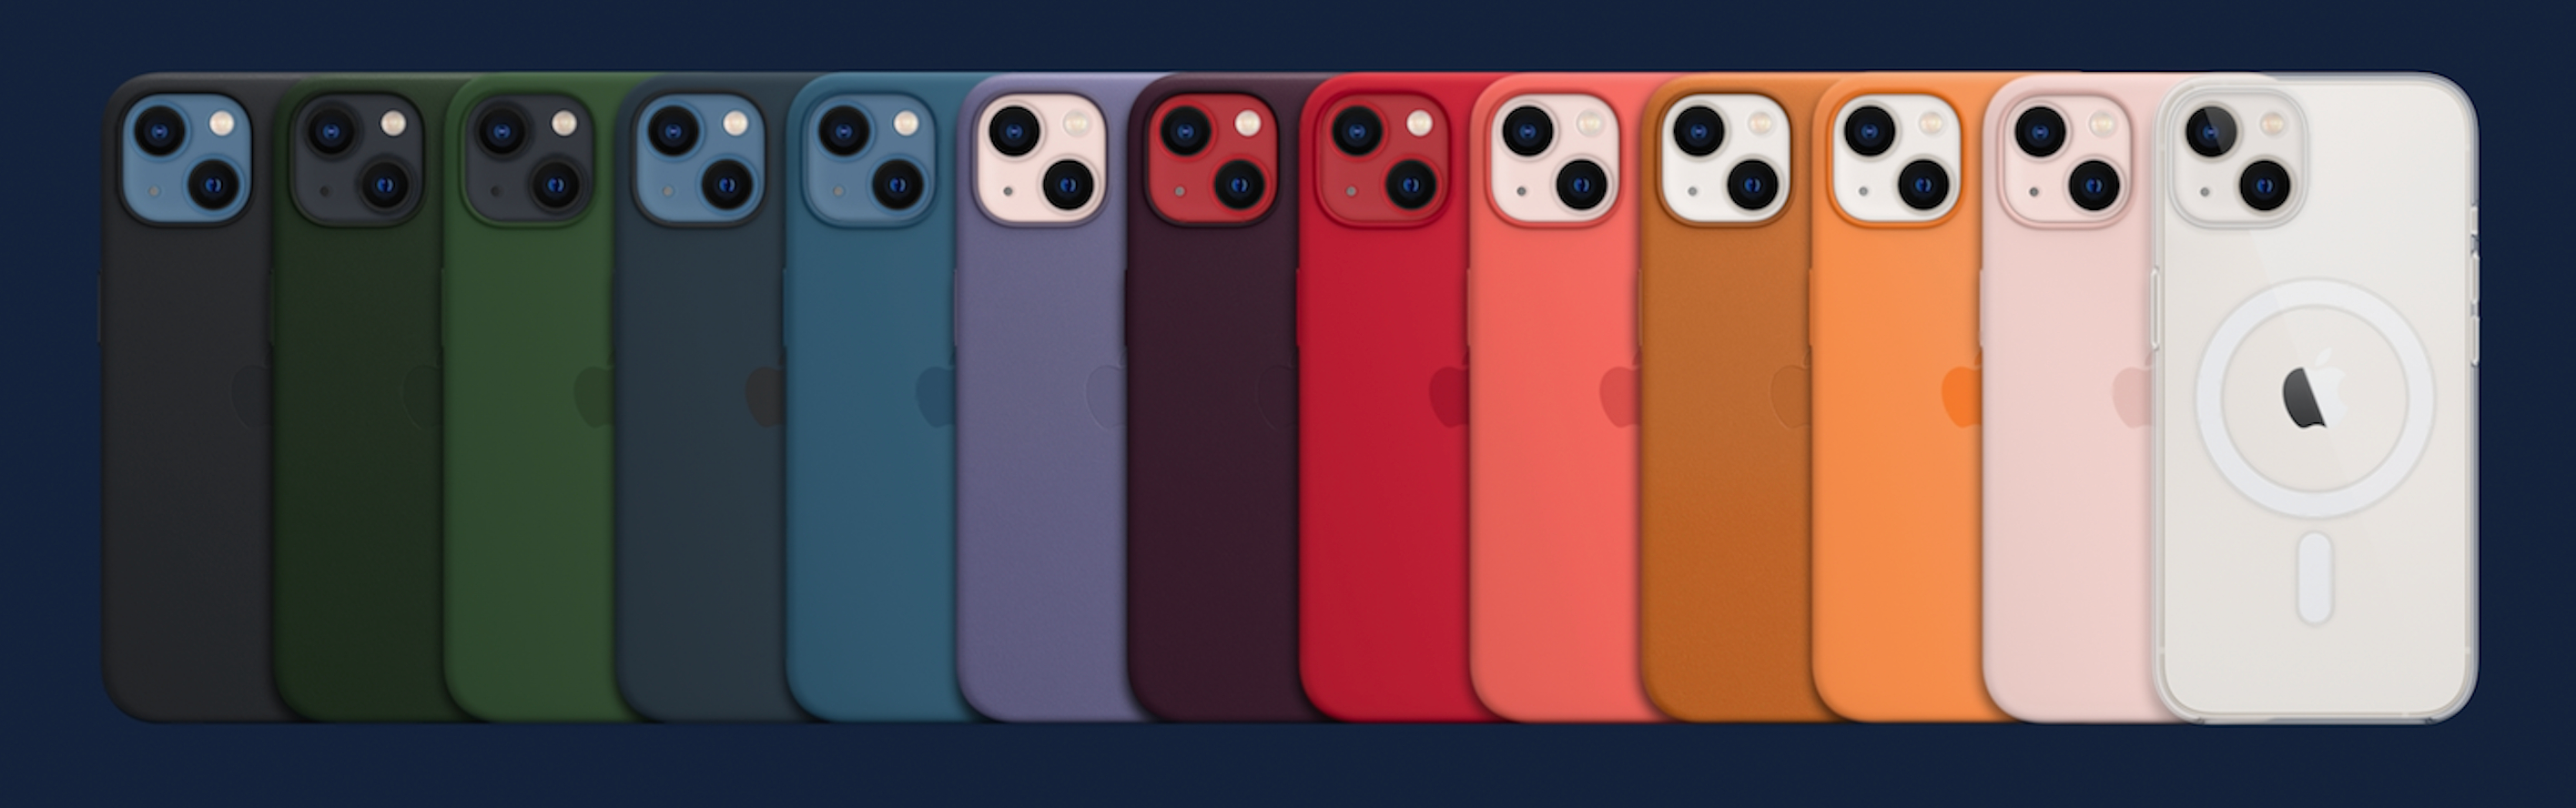 Apple iphone 13 mini чехлы. Apple Silicon Case iphone 13 Mini. Apple iphone 13 Pro чехол. Apple Silicon Case iphone 13 Pro Max. Чехол Эппл оригинальный айфон 13.